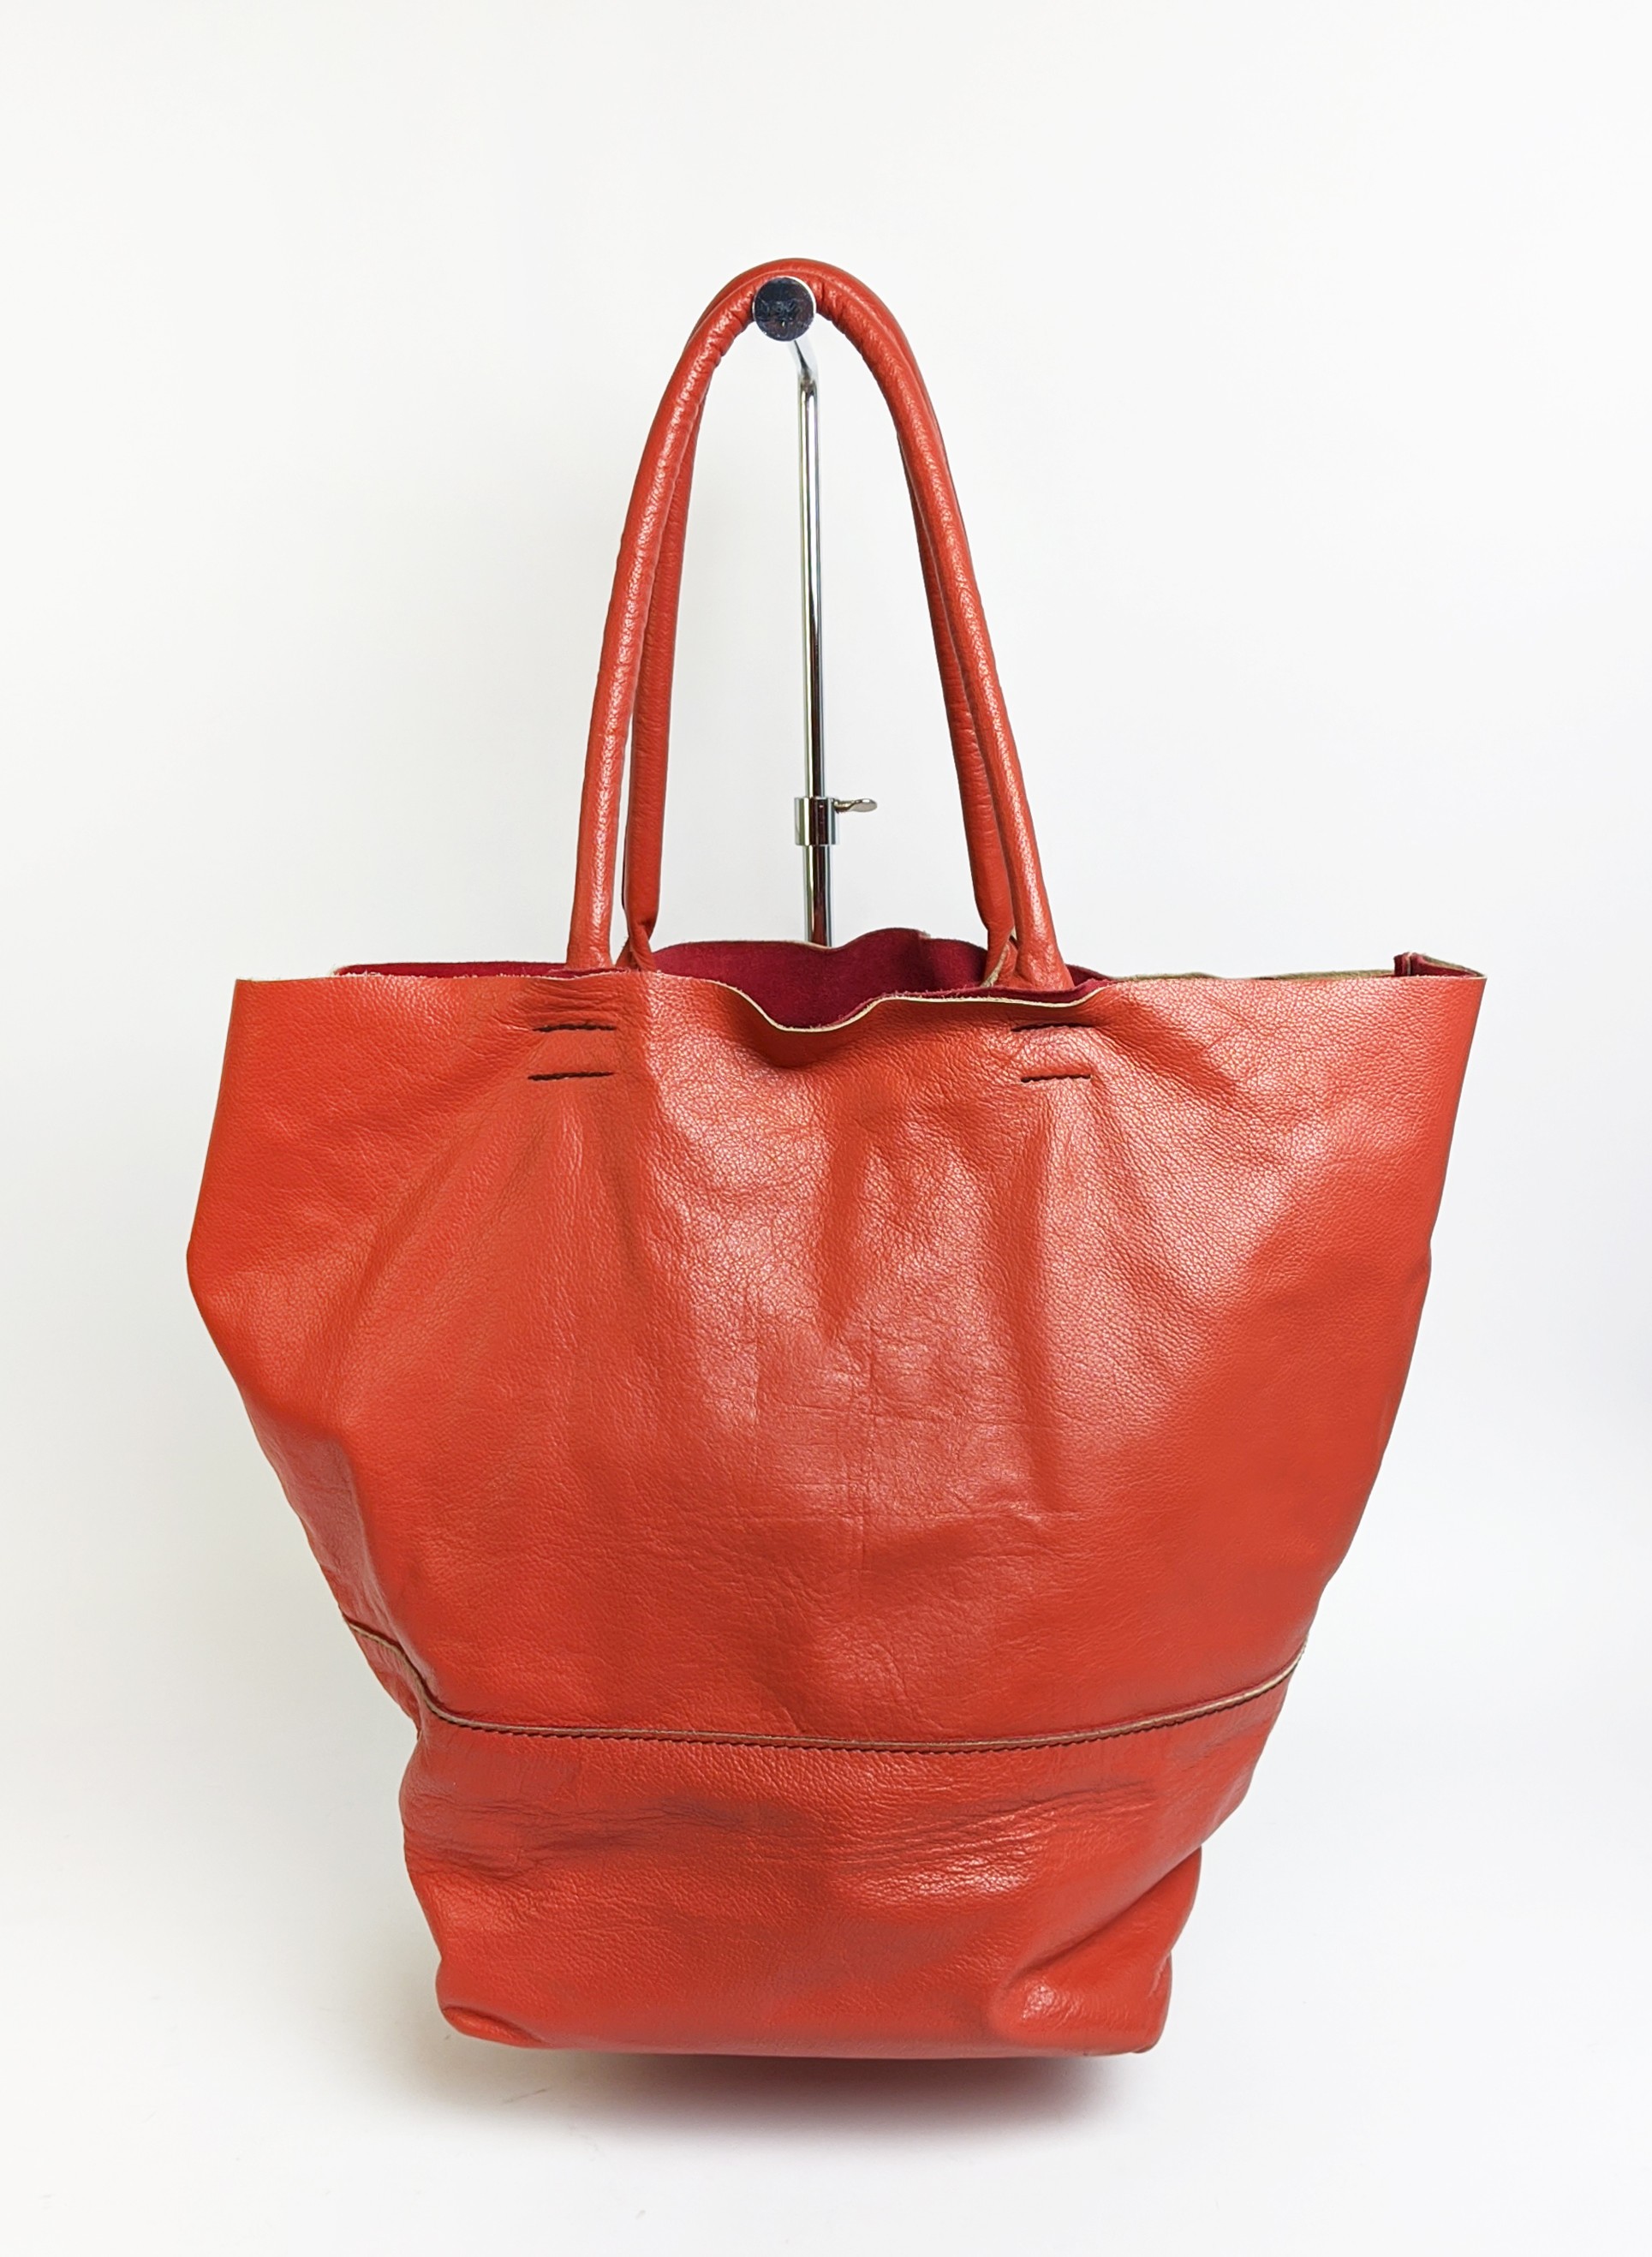 FERRAGAMO VINTAGE TOTE BAG, nylon with leather strap, top zippered closure and silver tone - Bild 2 aus 19